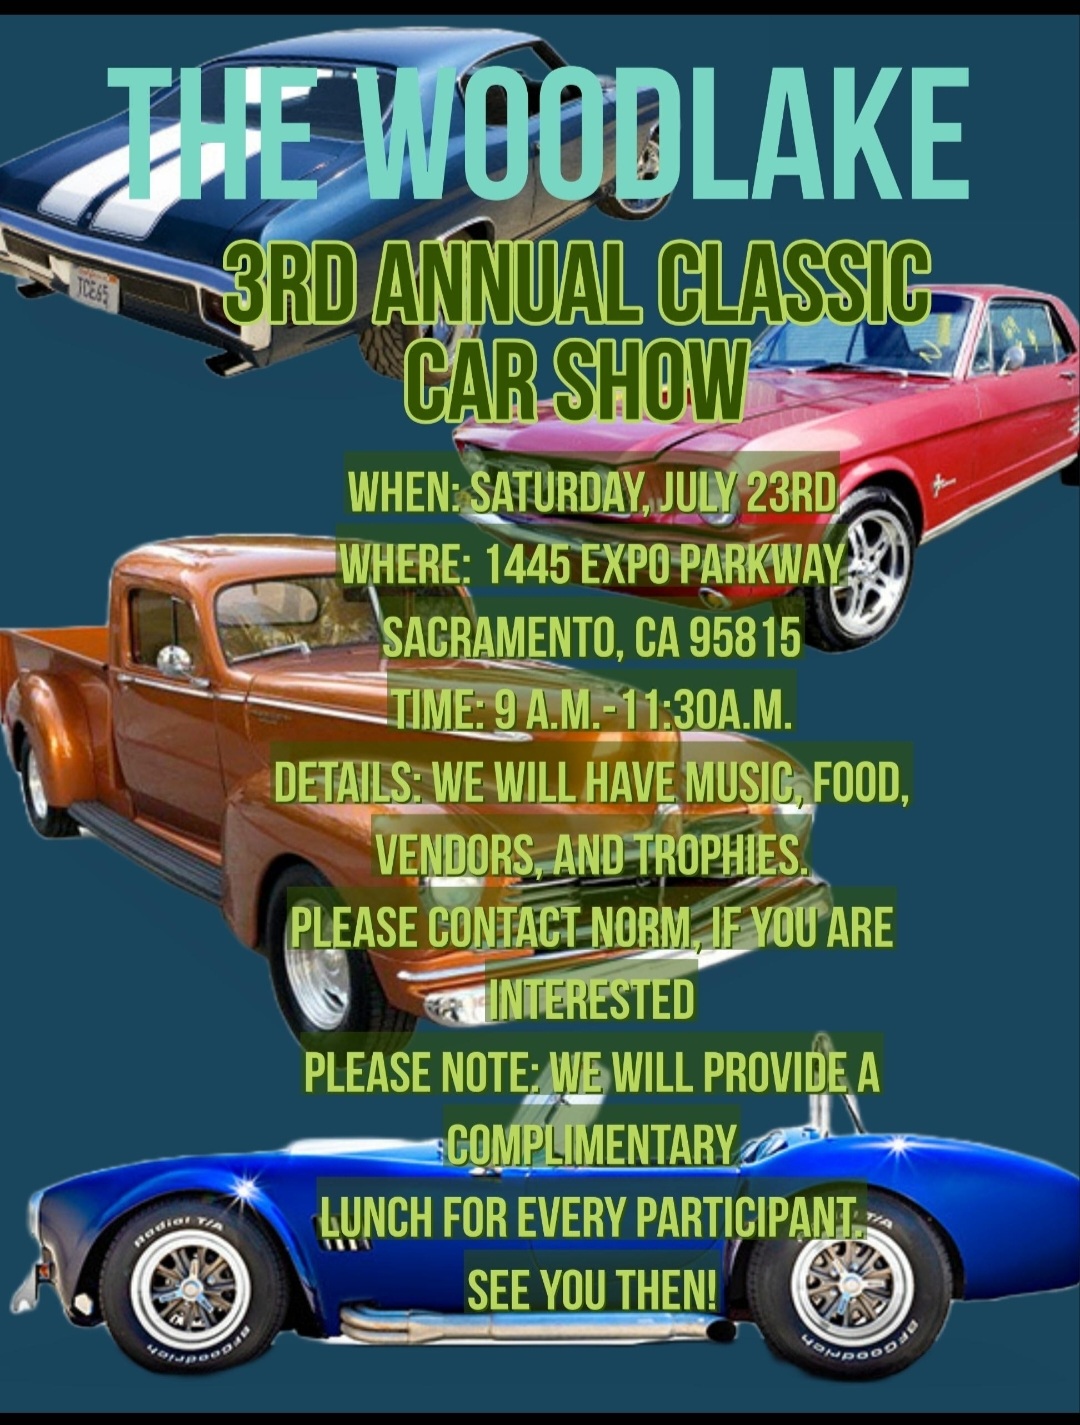 Woodlake Classic Car Show